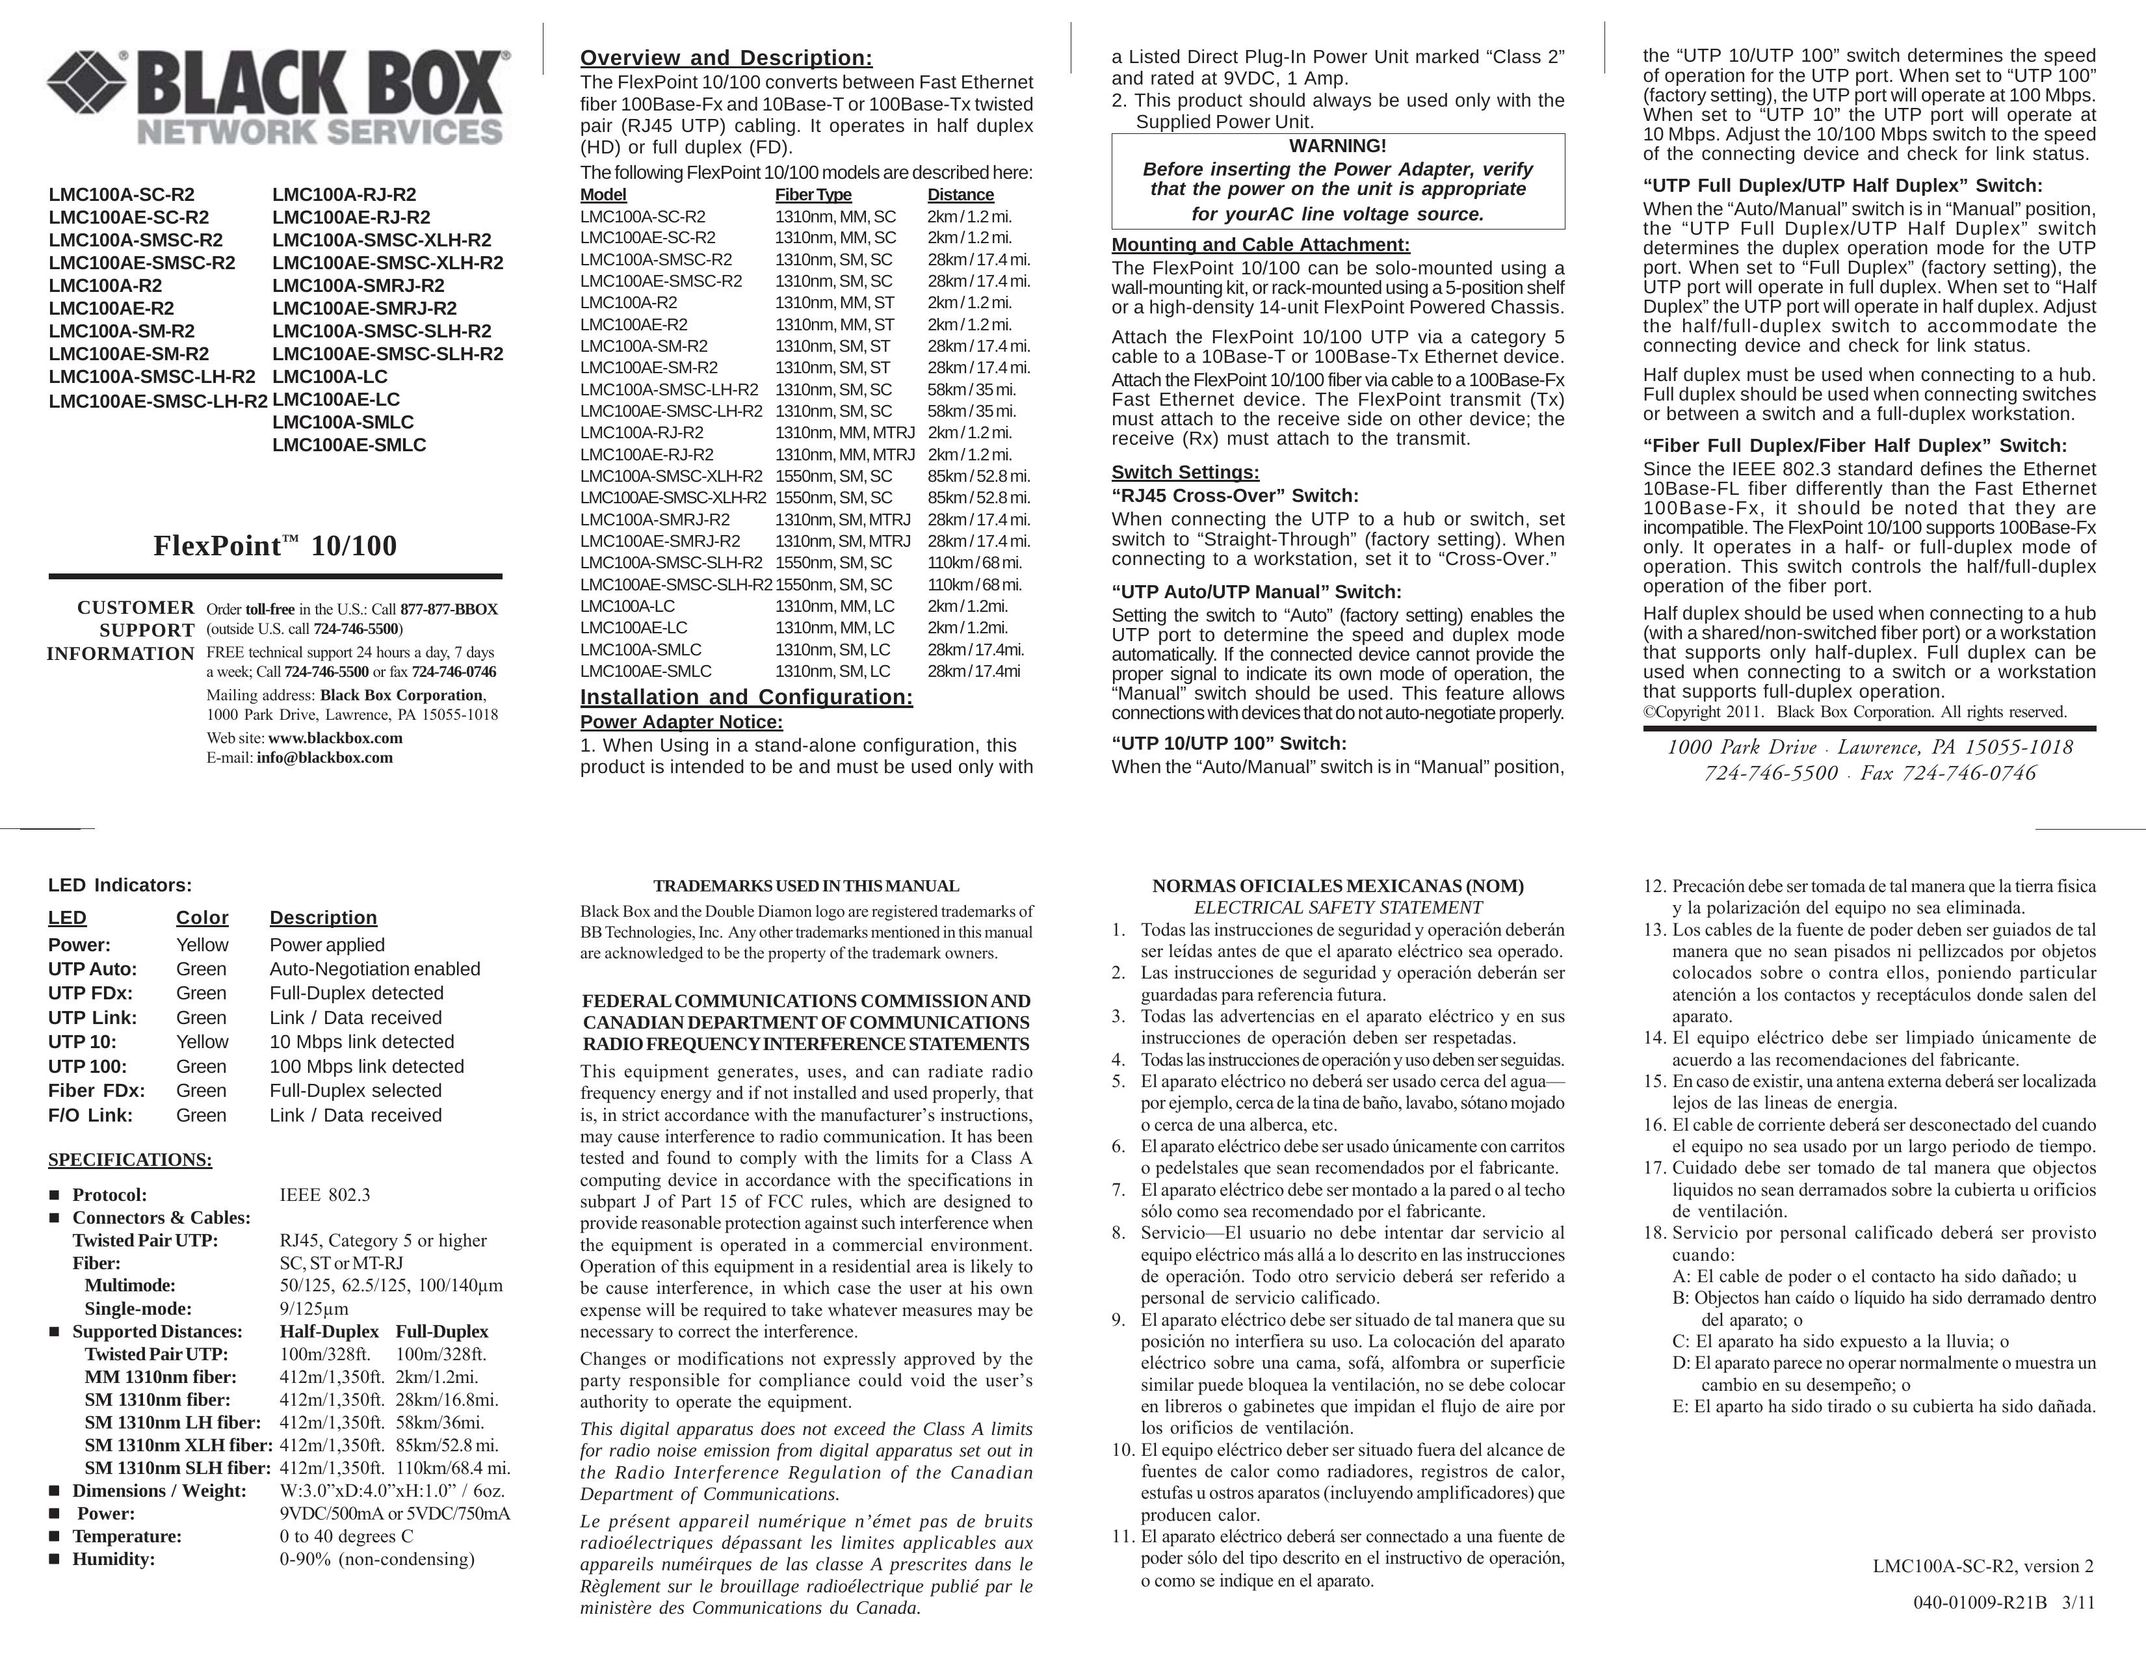 Black Box LMC100A-R2 Network Cables User Manual